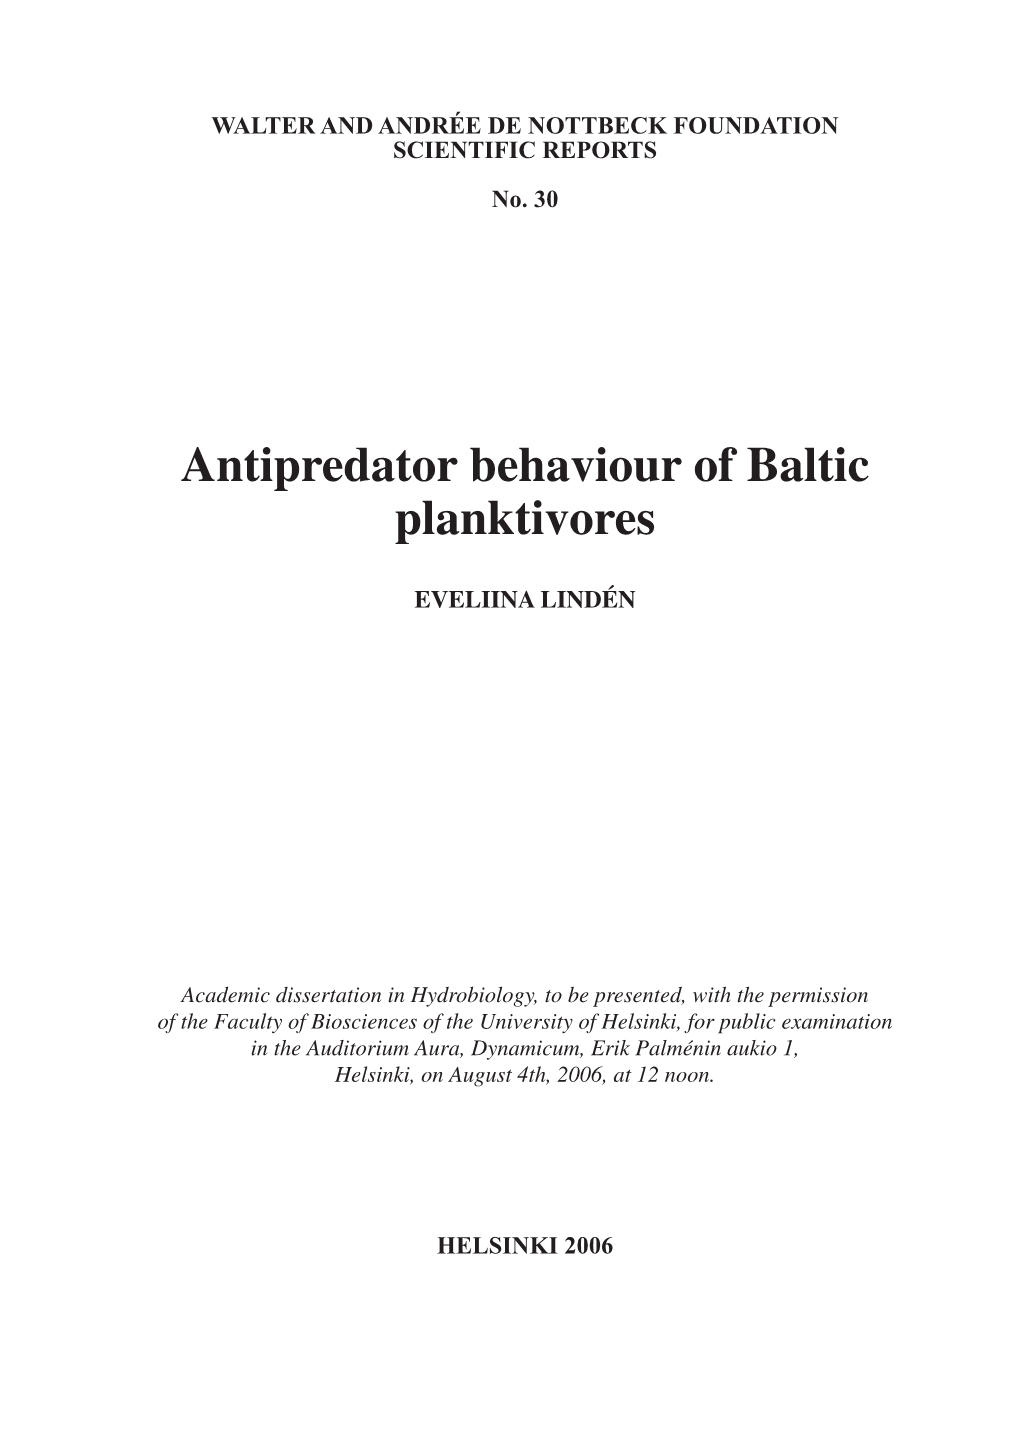 Antipredator Behaviour of Baltic Planktivores